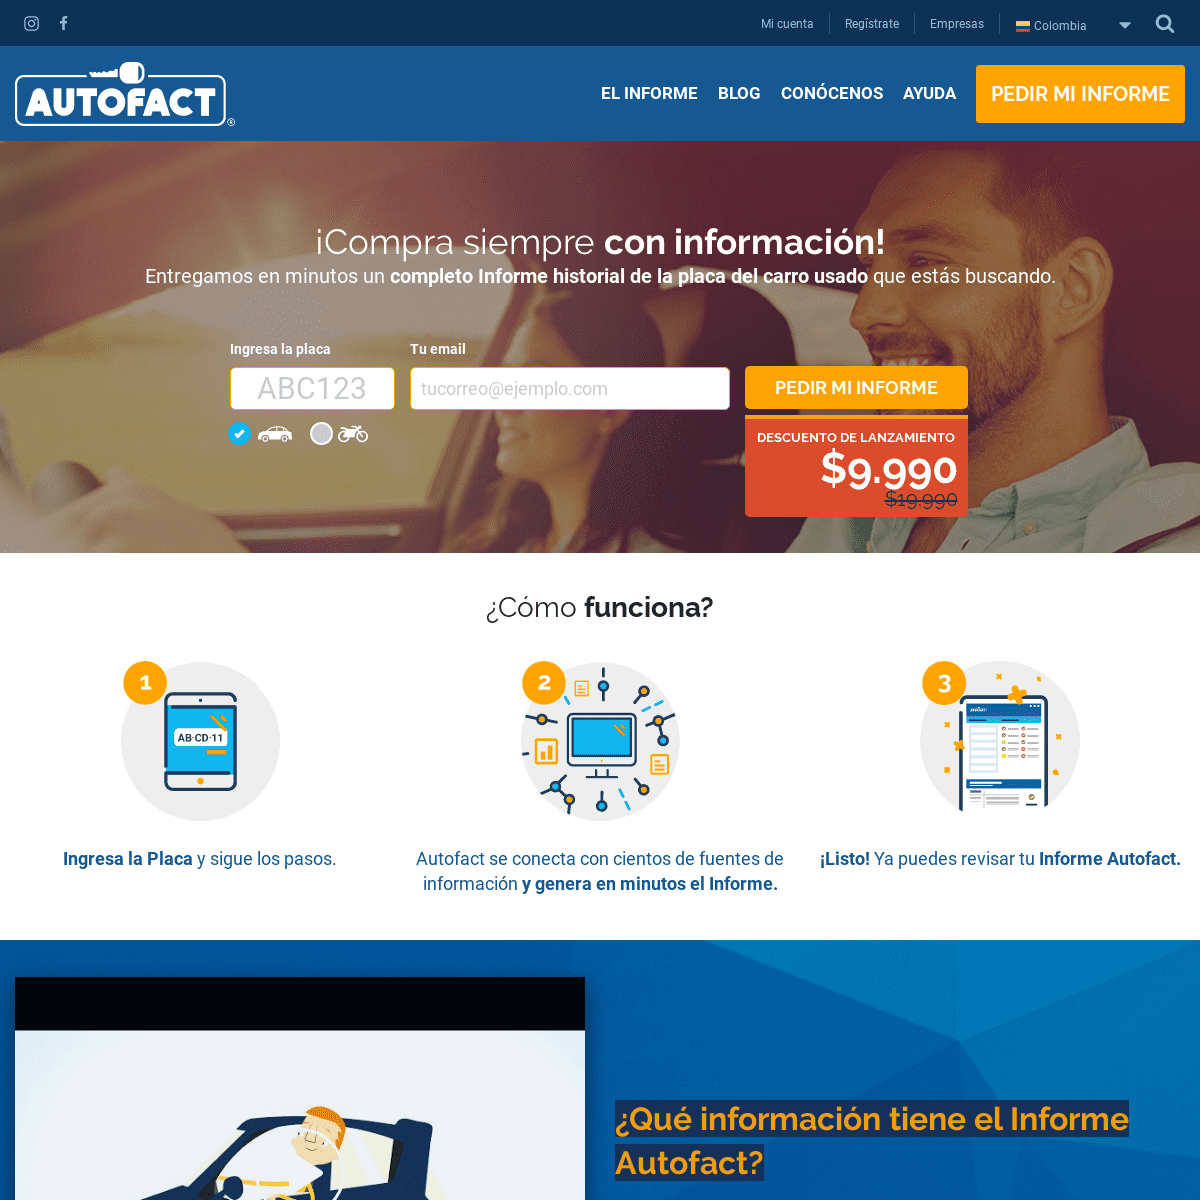 A complete backup of autofact.com.co